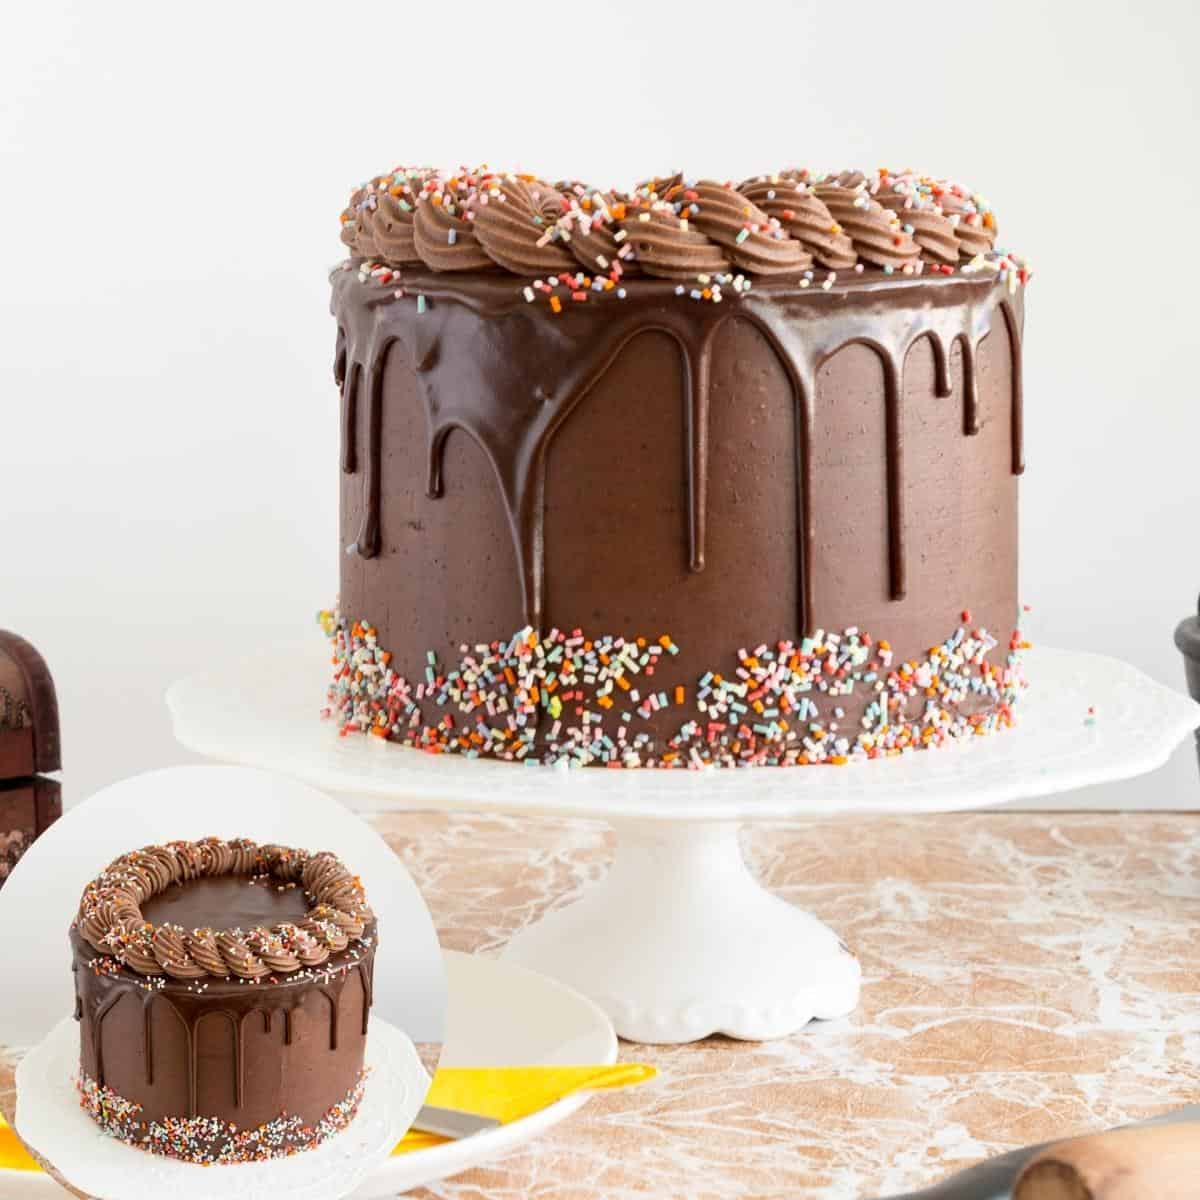 Chocolate Birthday Cake from Scratch (video)